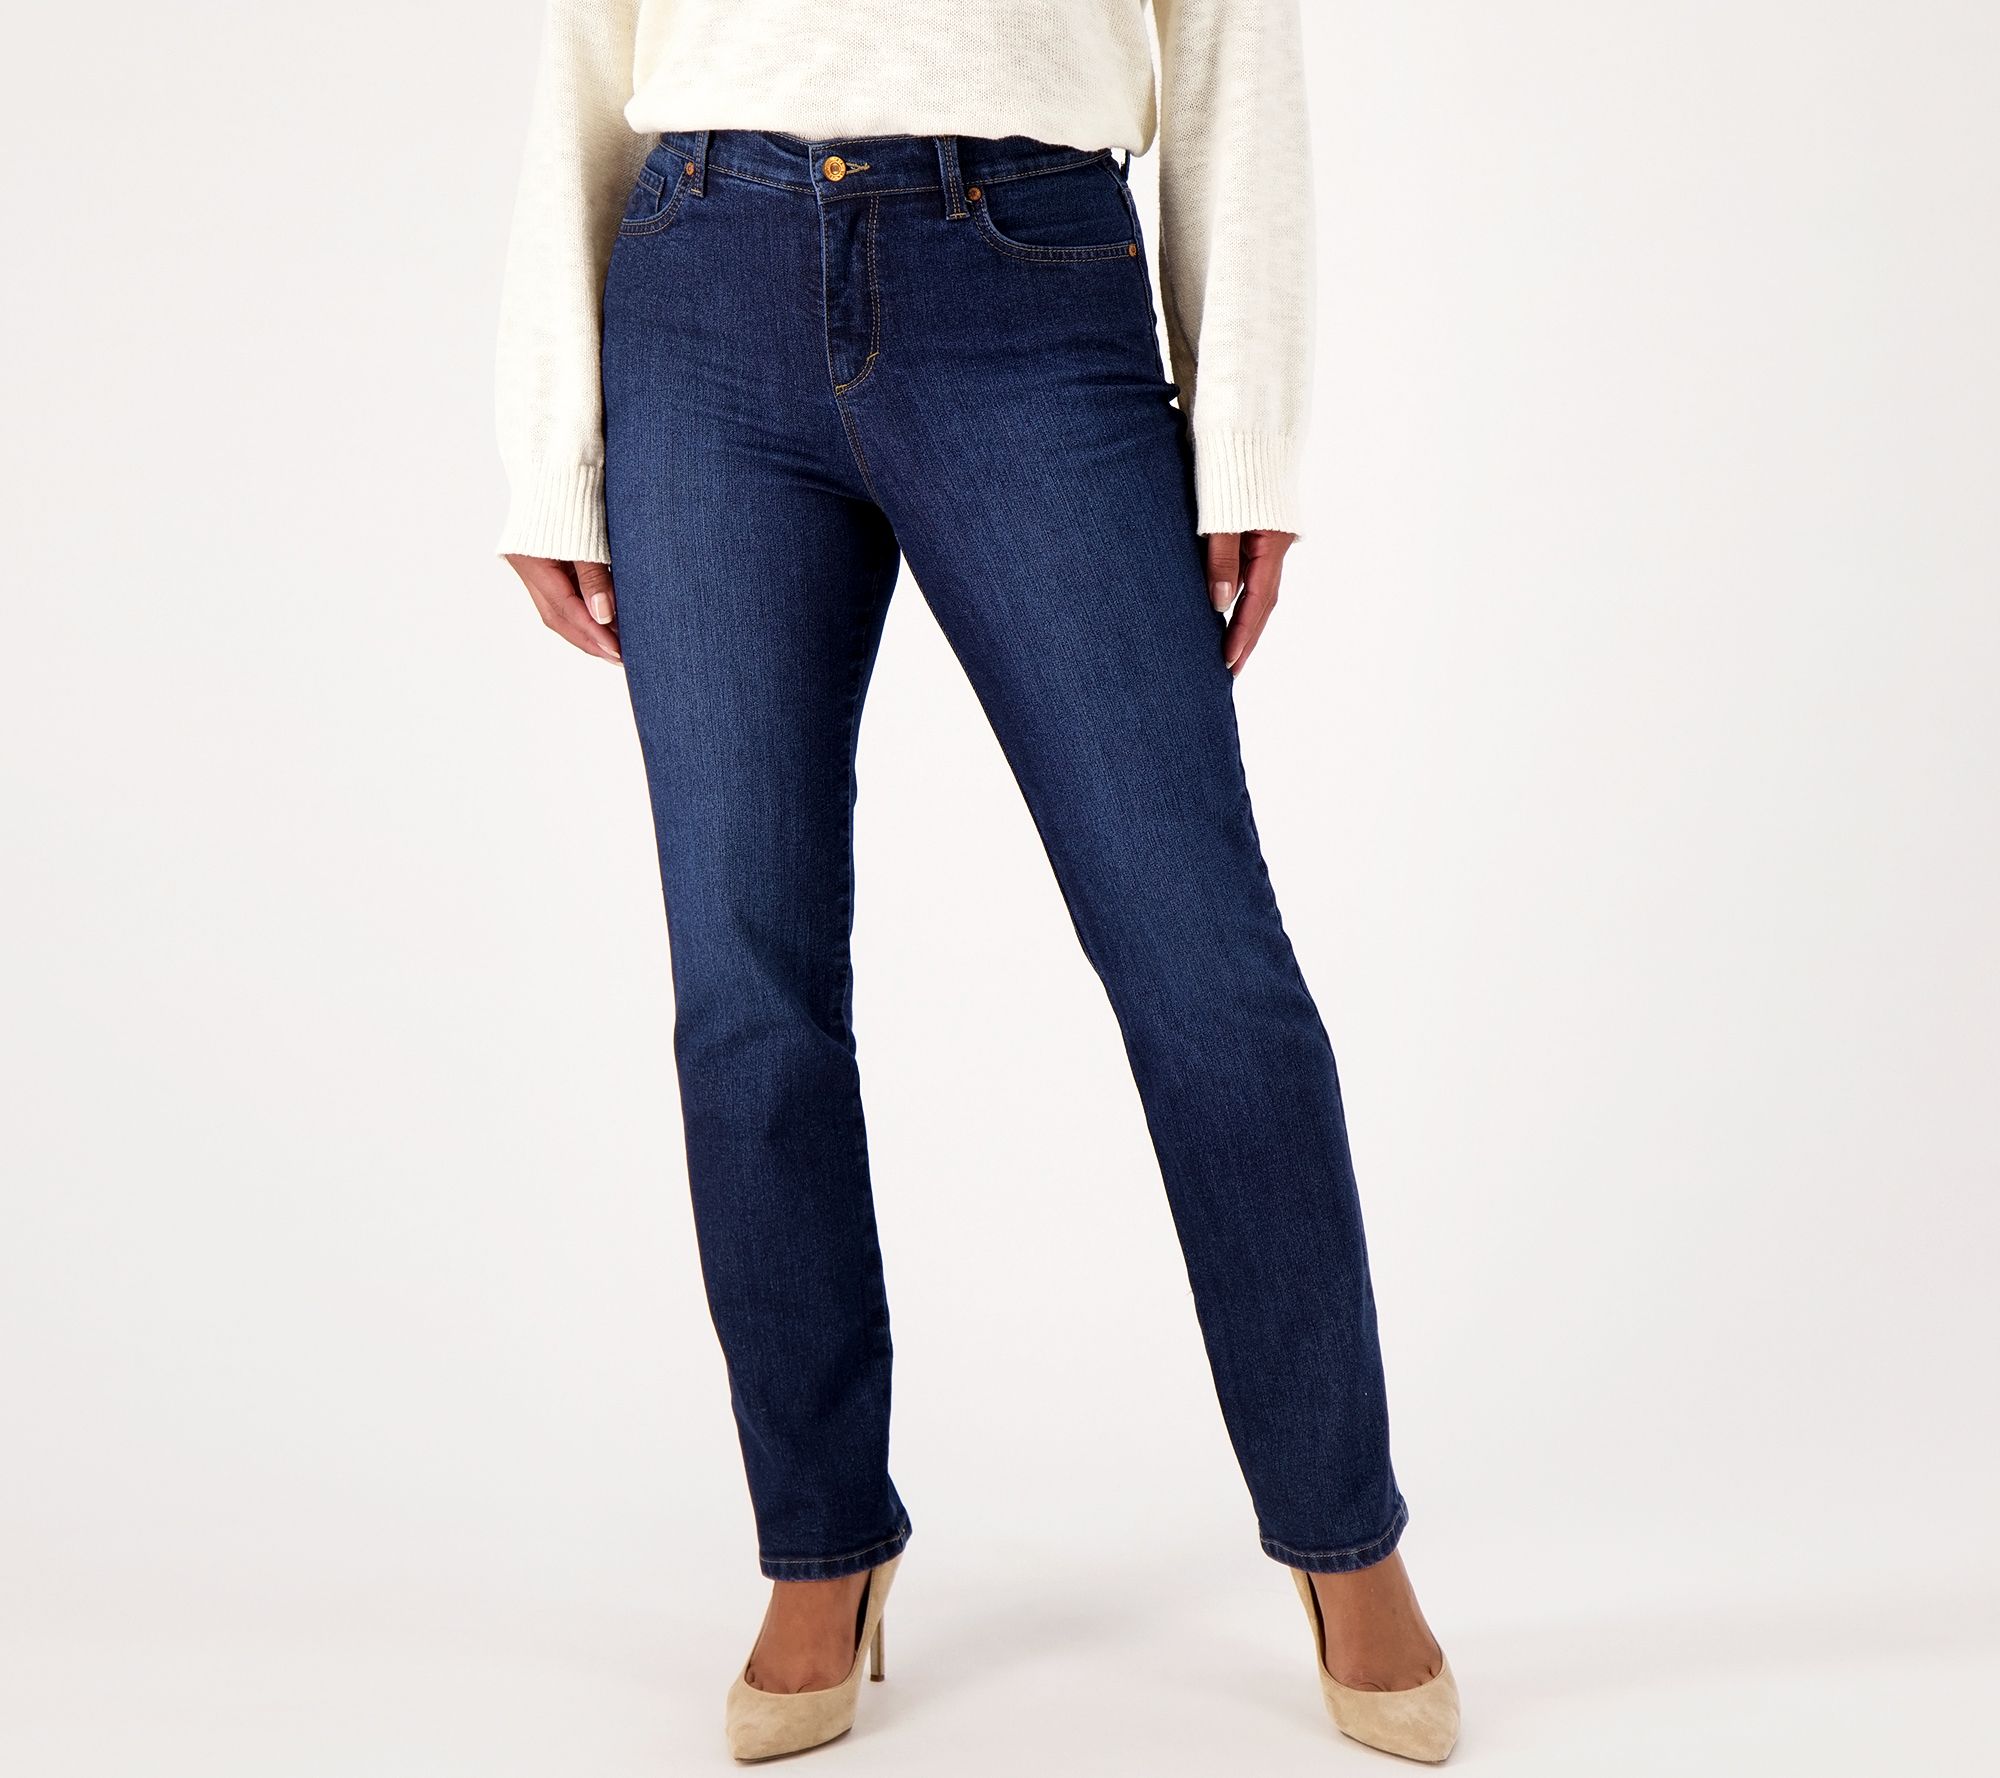 Gloria Vanderbilt Amanda Jeans - clothing & accessories - by owner